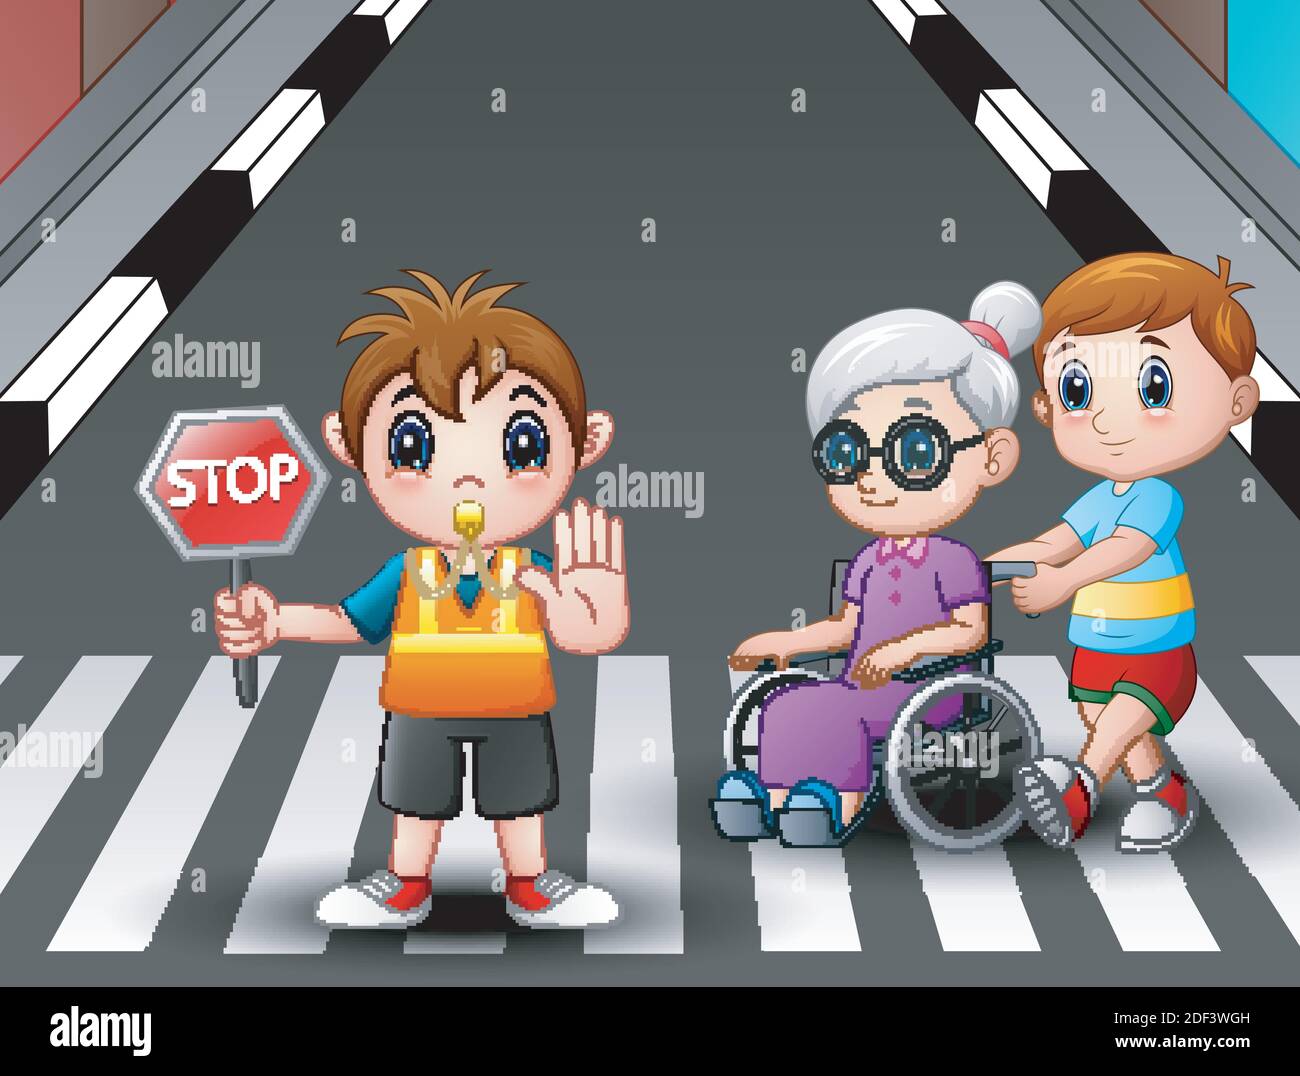 Vector illustration of Cartoon flagger and boy helps grandma in wheelchair crossing the street Stock Vector